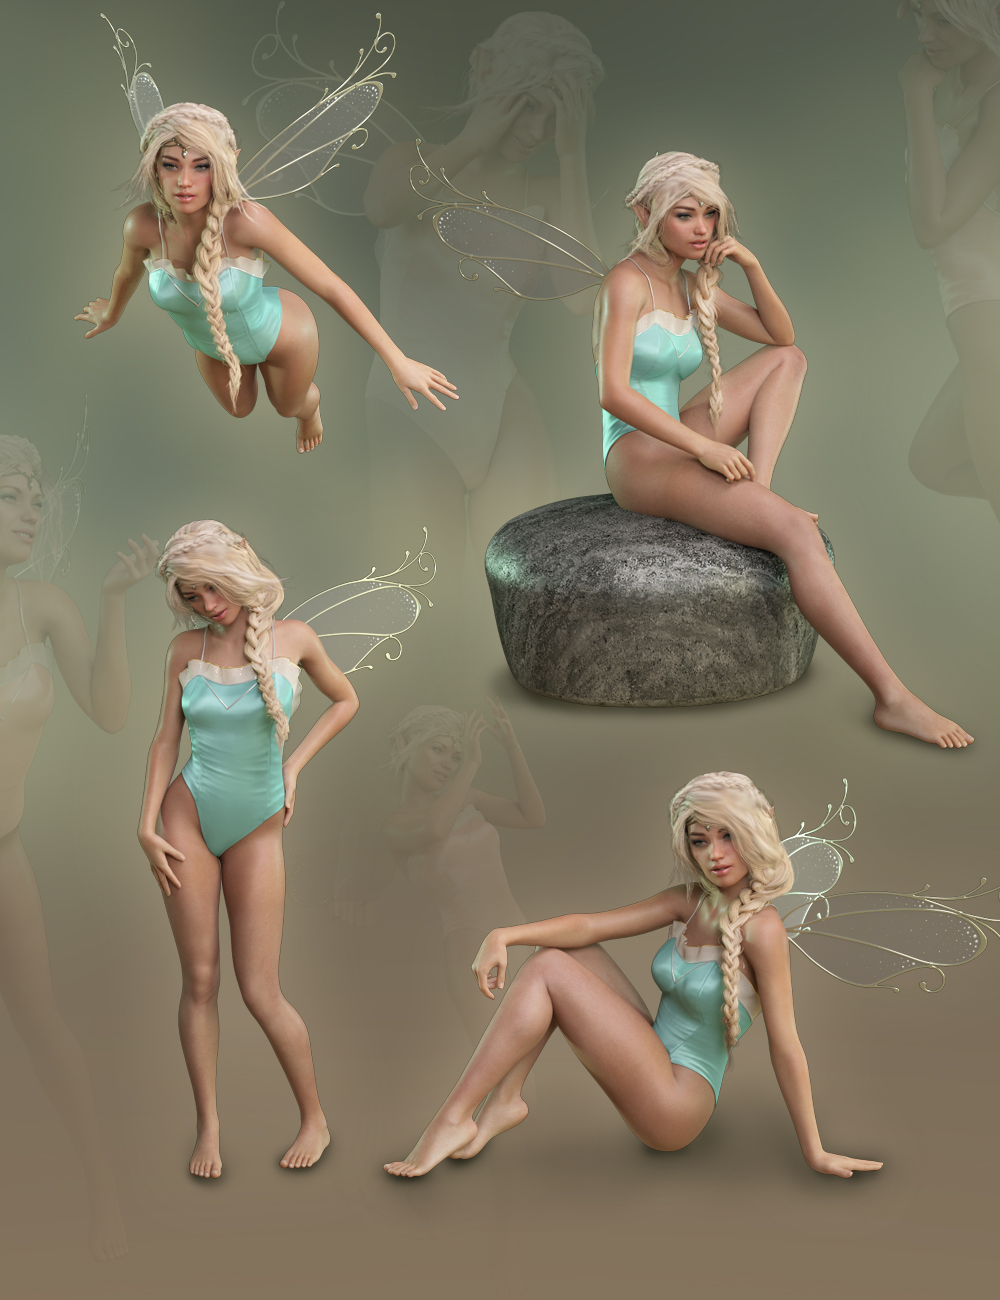 Fairy Wonder Poses for Genesis 8 Female by: Valery3Di3D_Lotus, 3D Models by Daz 3D